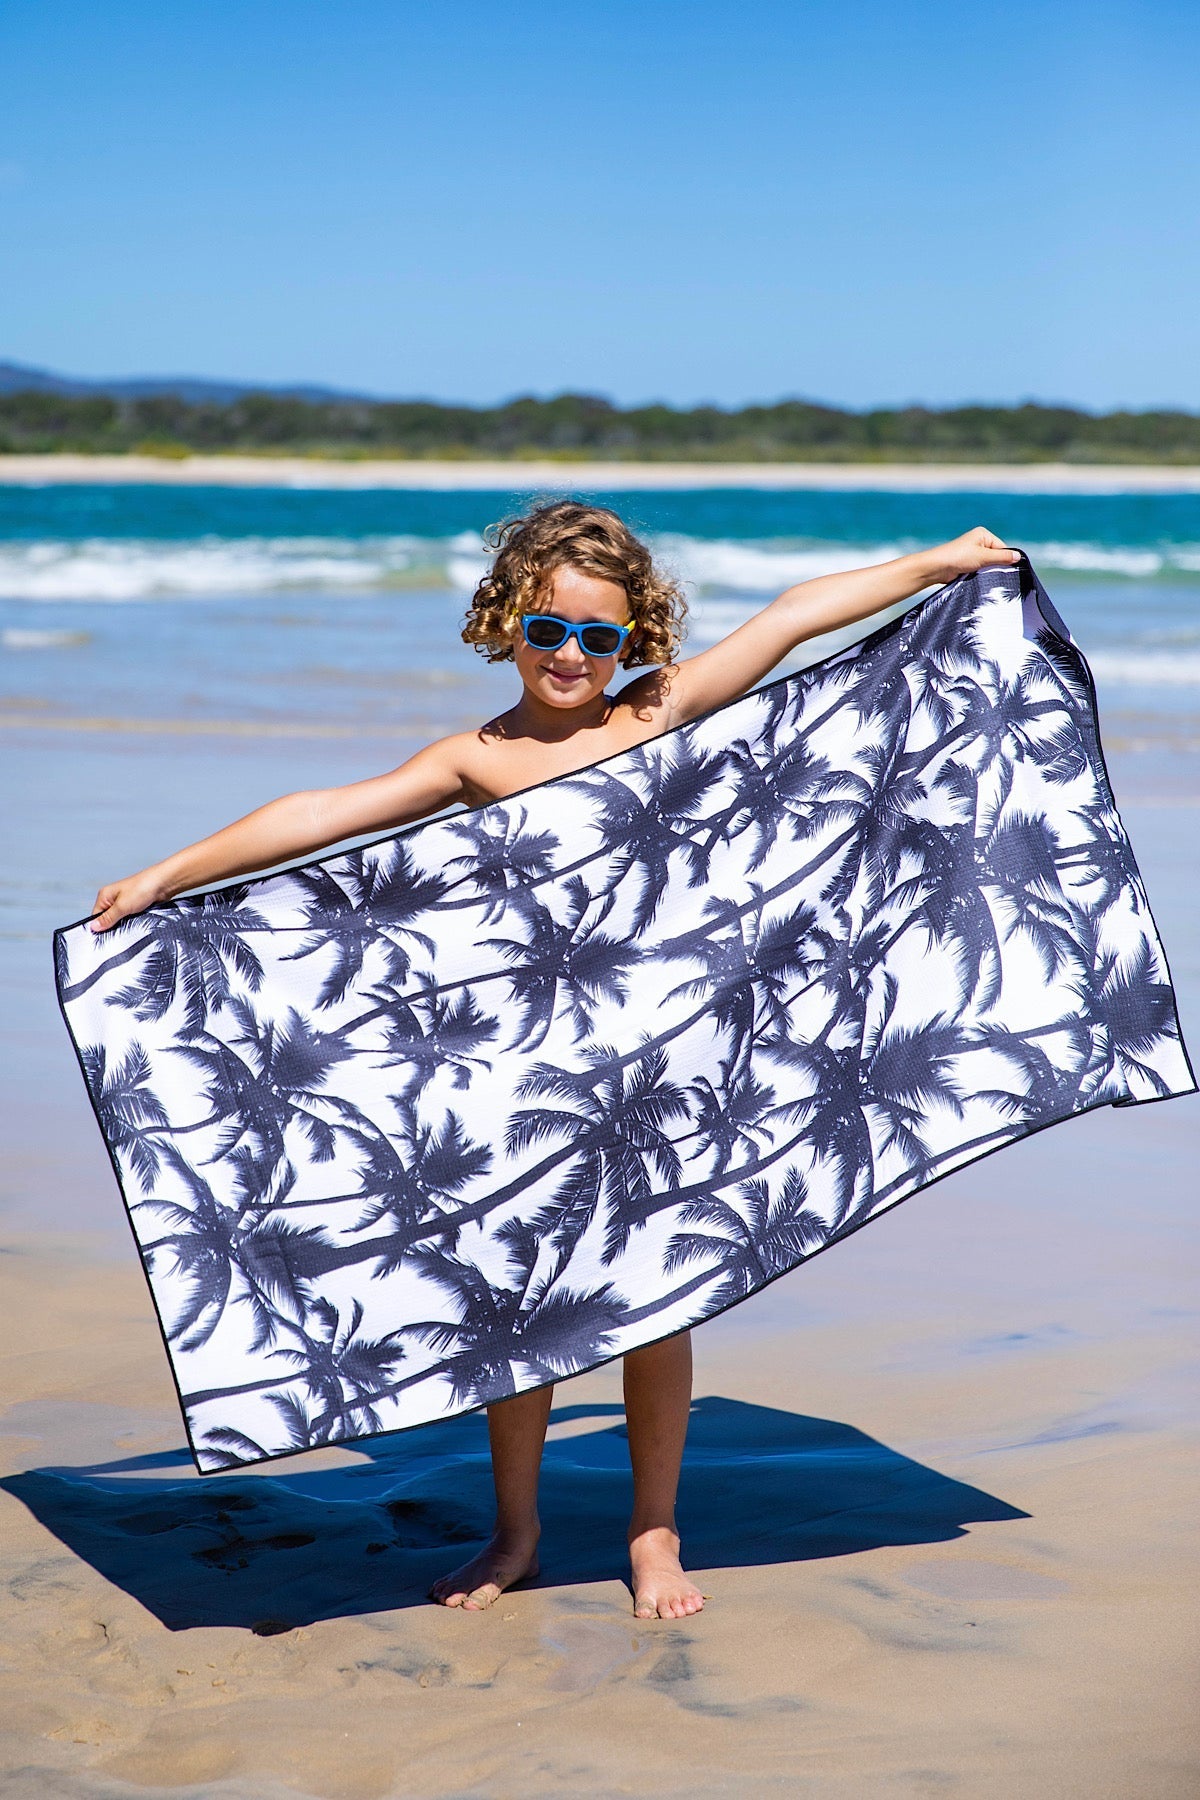 Dinosaur Personalized Beach Towel for Kids with Name Custom Beach